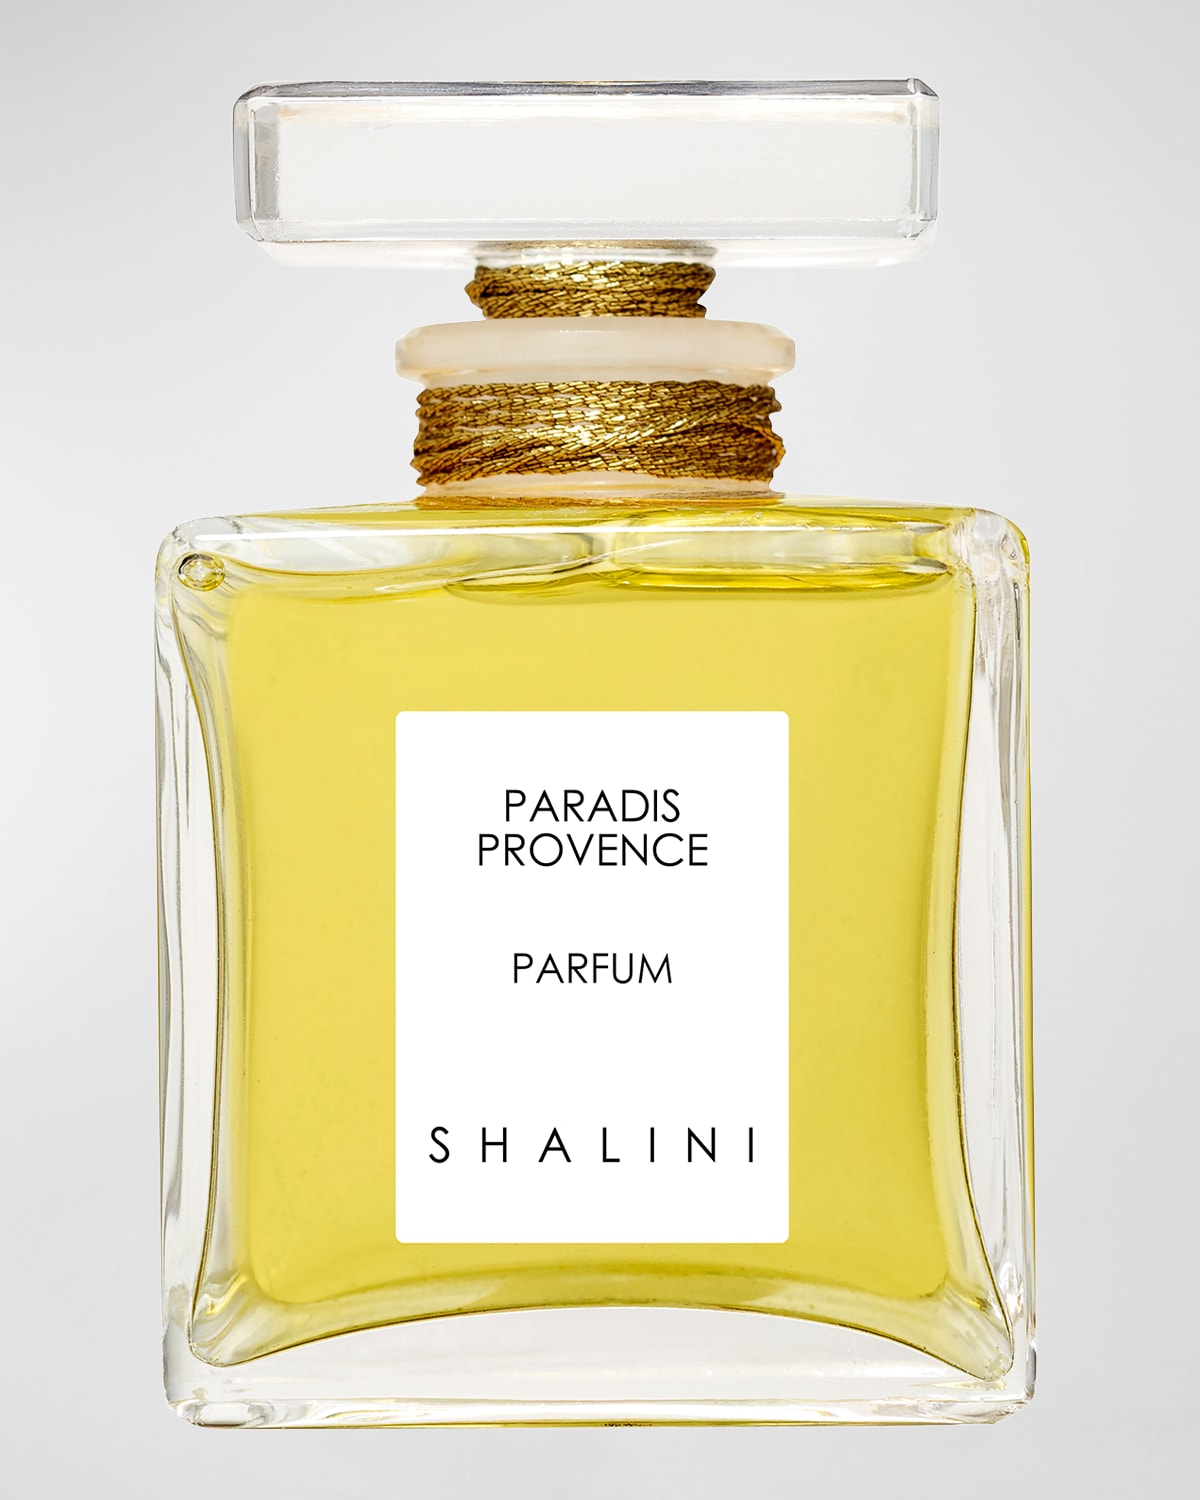 Paradis Provence Cubique Glass Bottle with Glass Stopper, 1.7 oz./ 50 mL